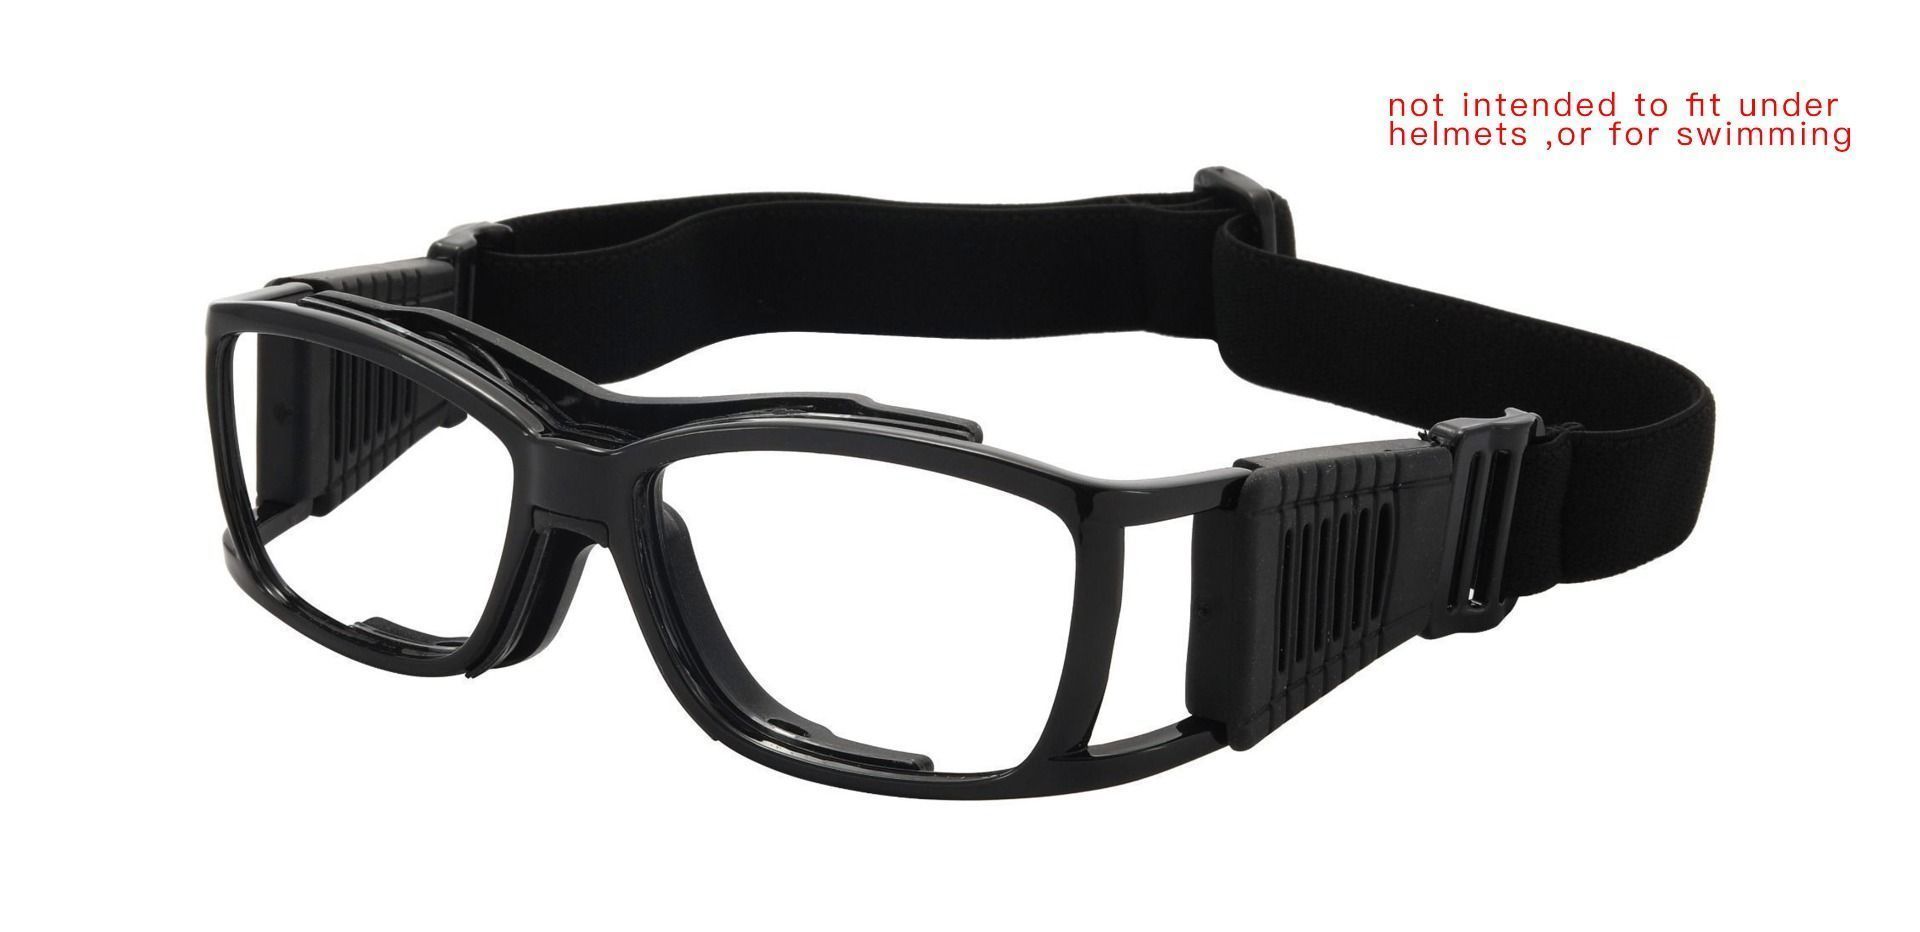 Jarrett Sports Goggles Prescription Glasses - Black, Men's Eyeglasses